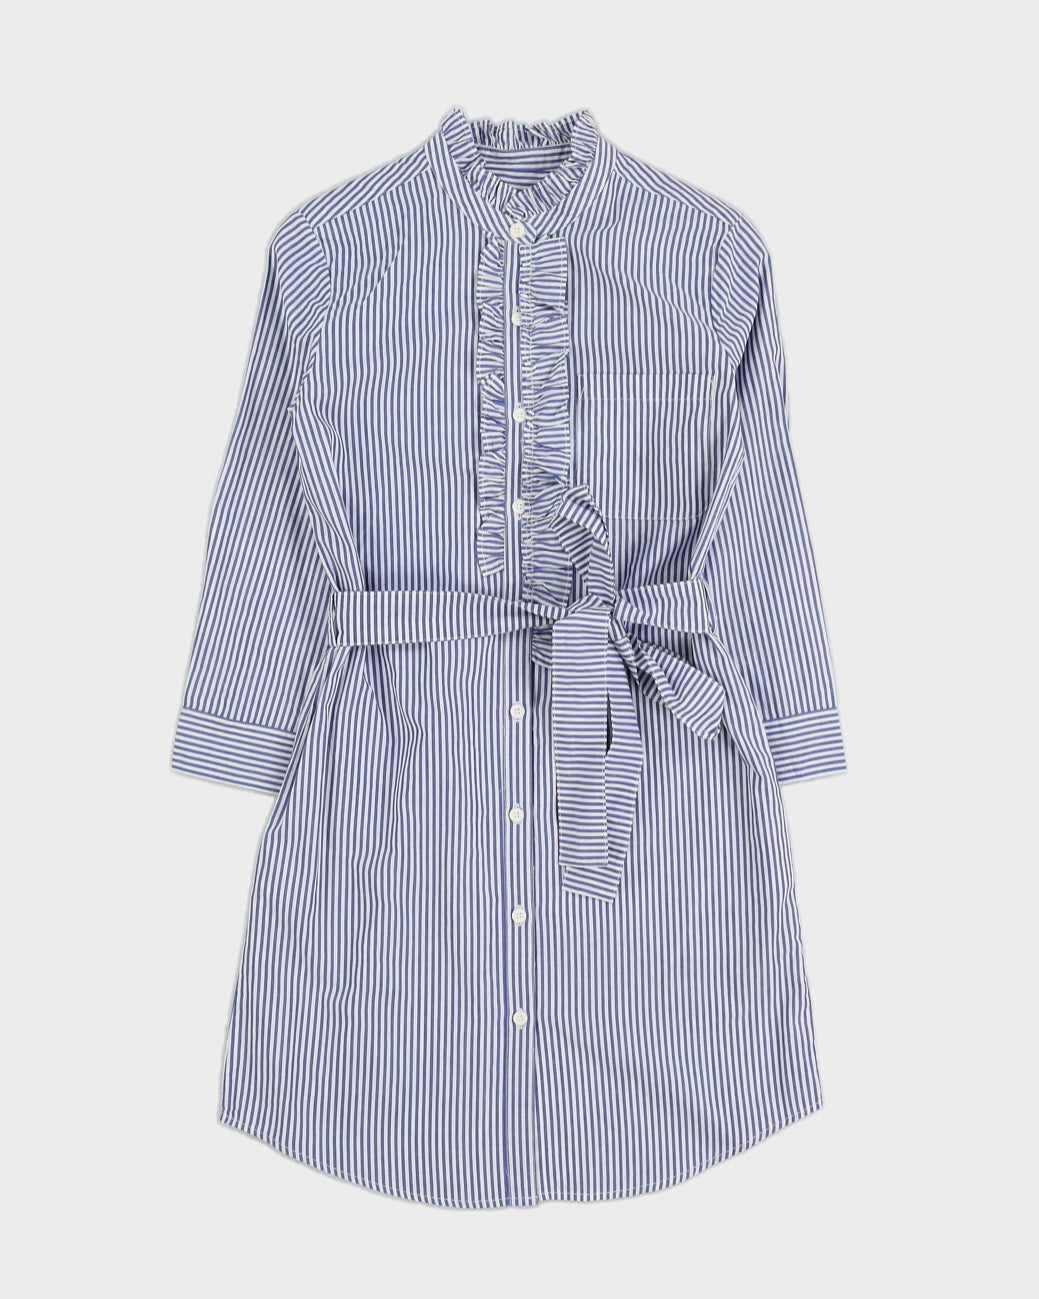 Burberry Blue Striped Shirt Dress - S